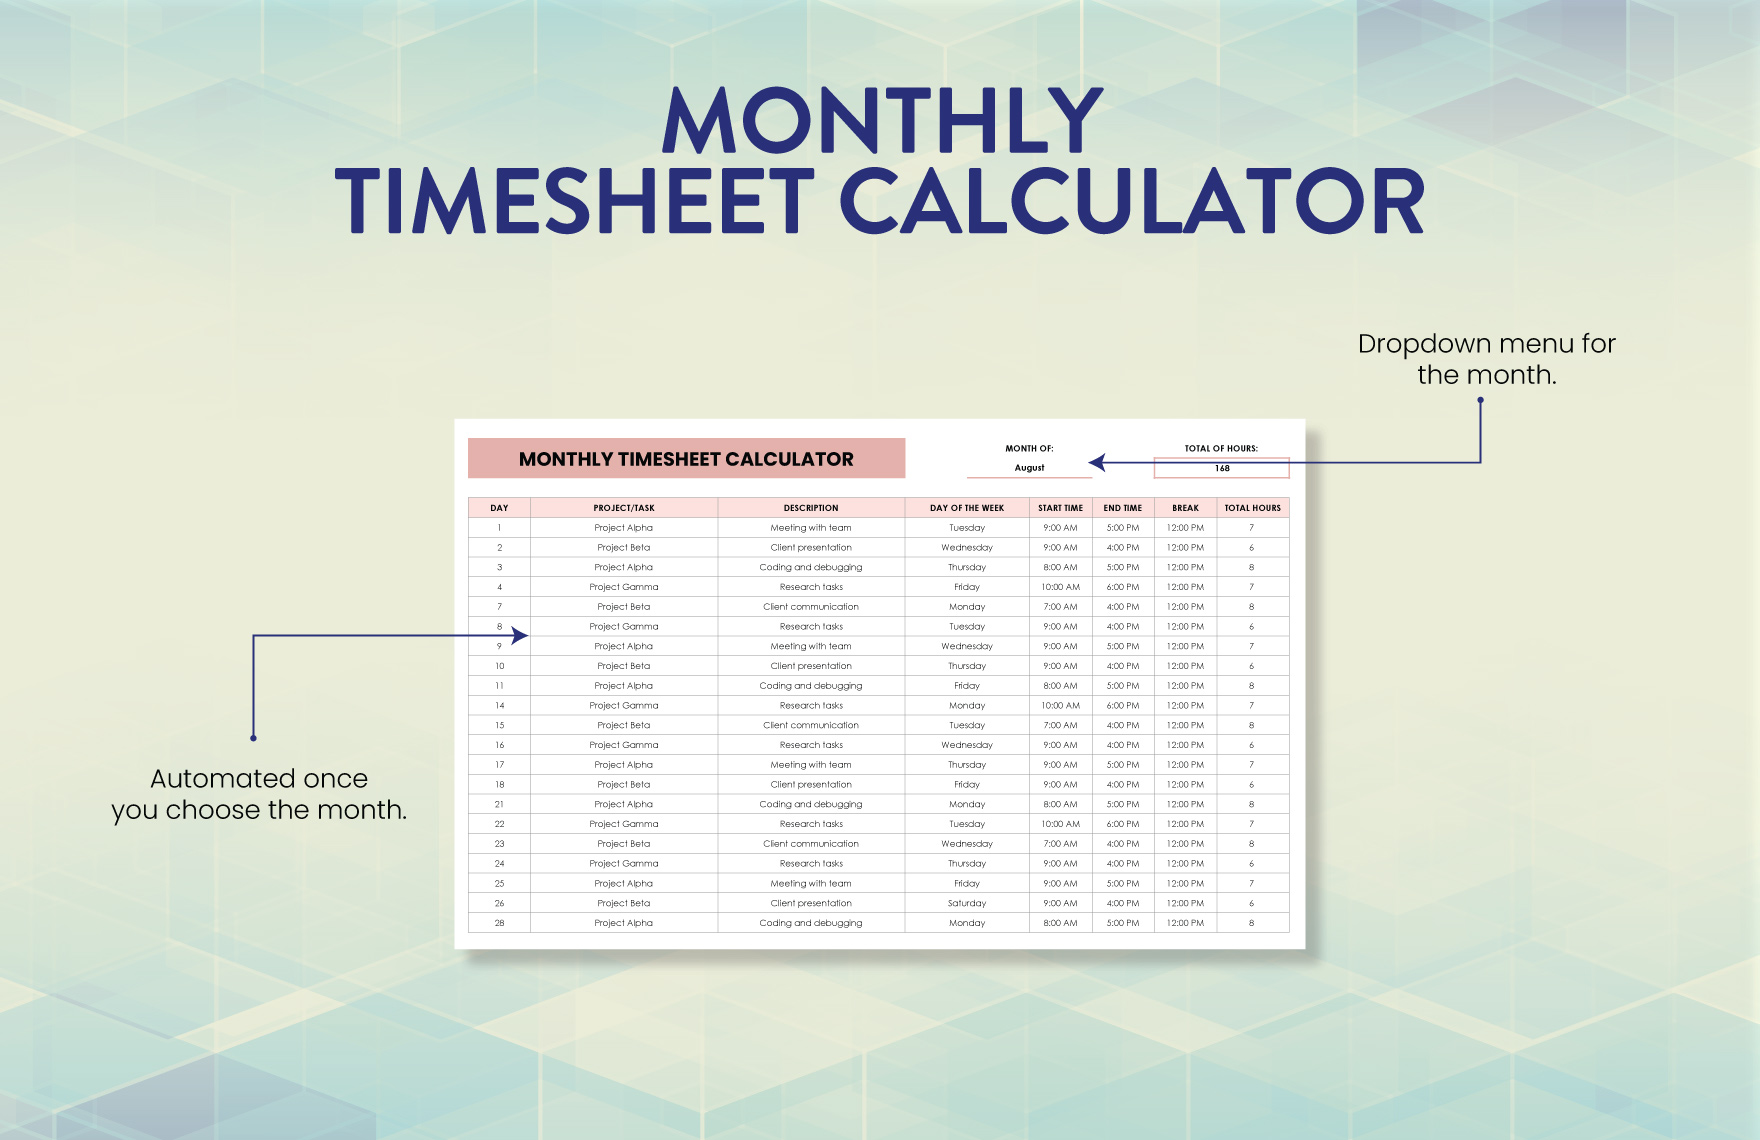 Monthly Timesheet Calculator Template